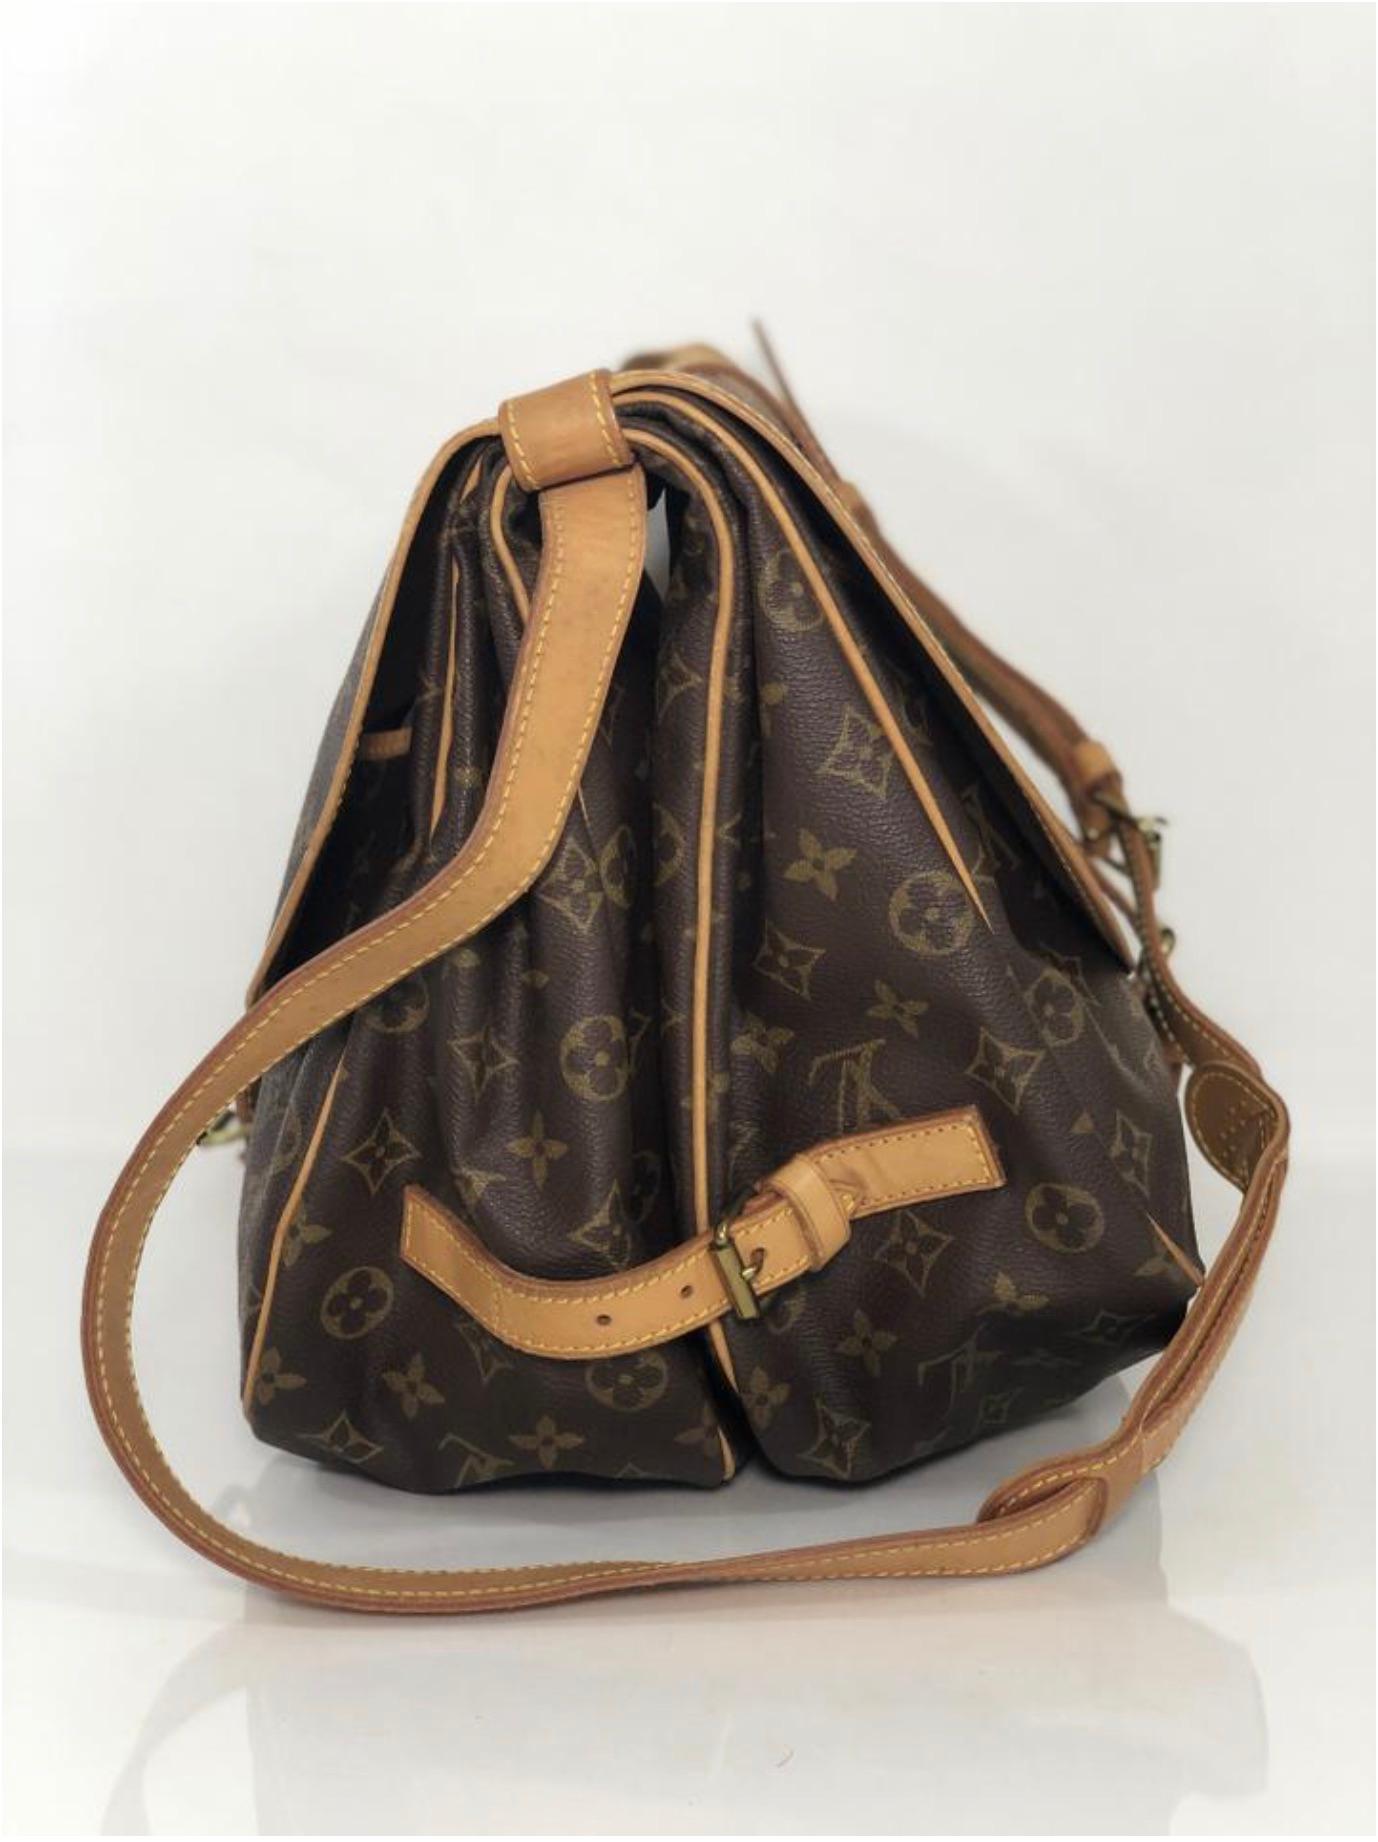  Louis Vuitton Monogram Saumur 35 Crossbody Shoulder Handbag In Good Condition For Sale In Saint Charles, IL